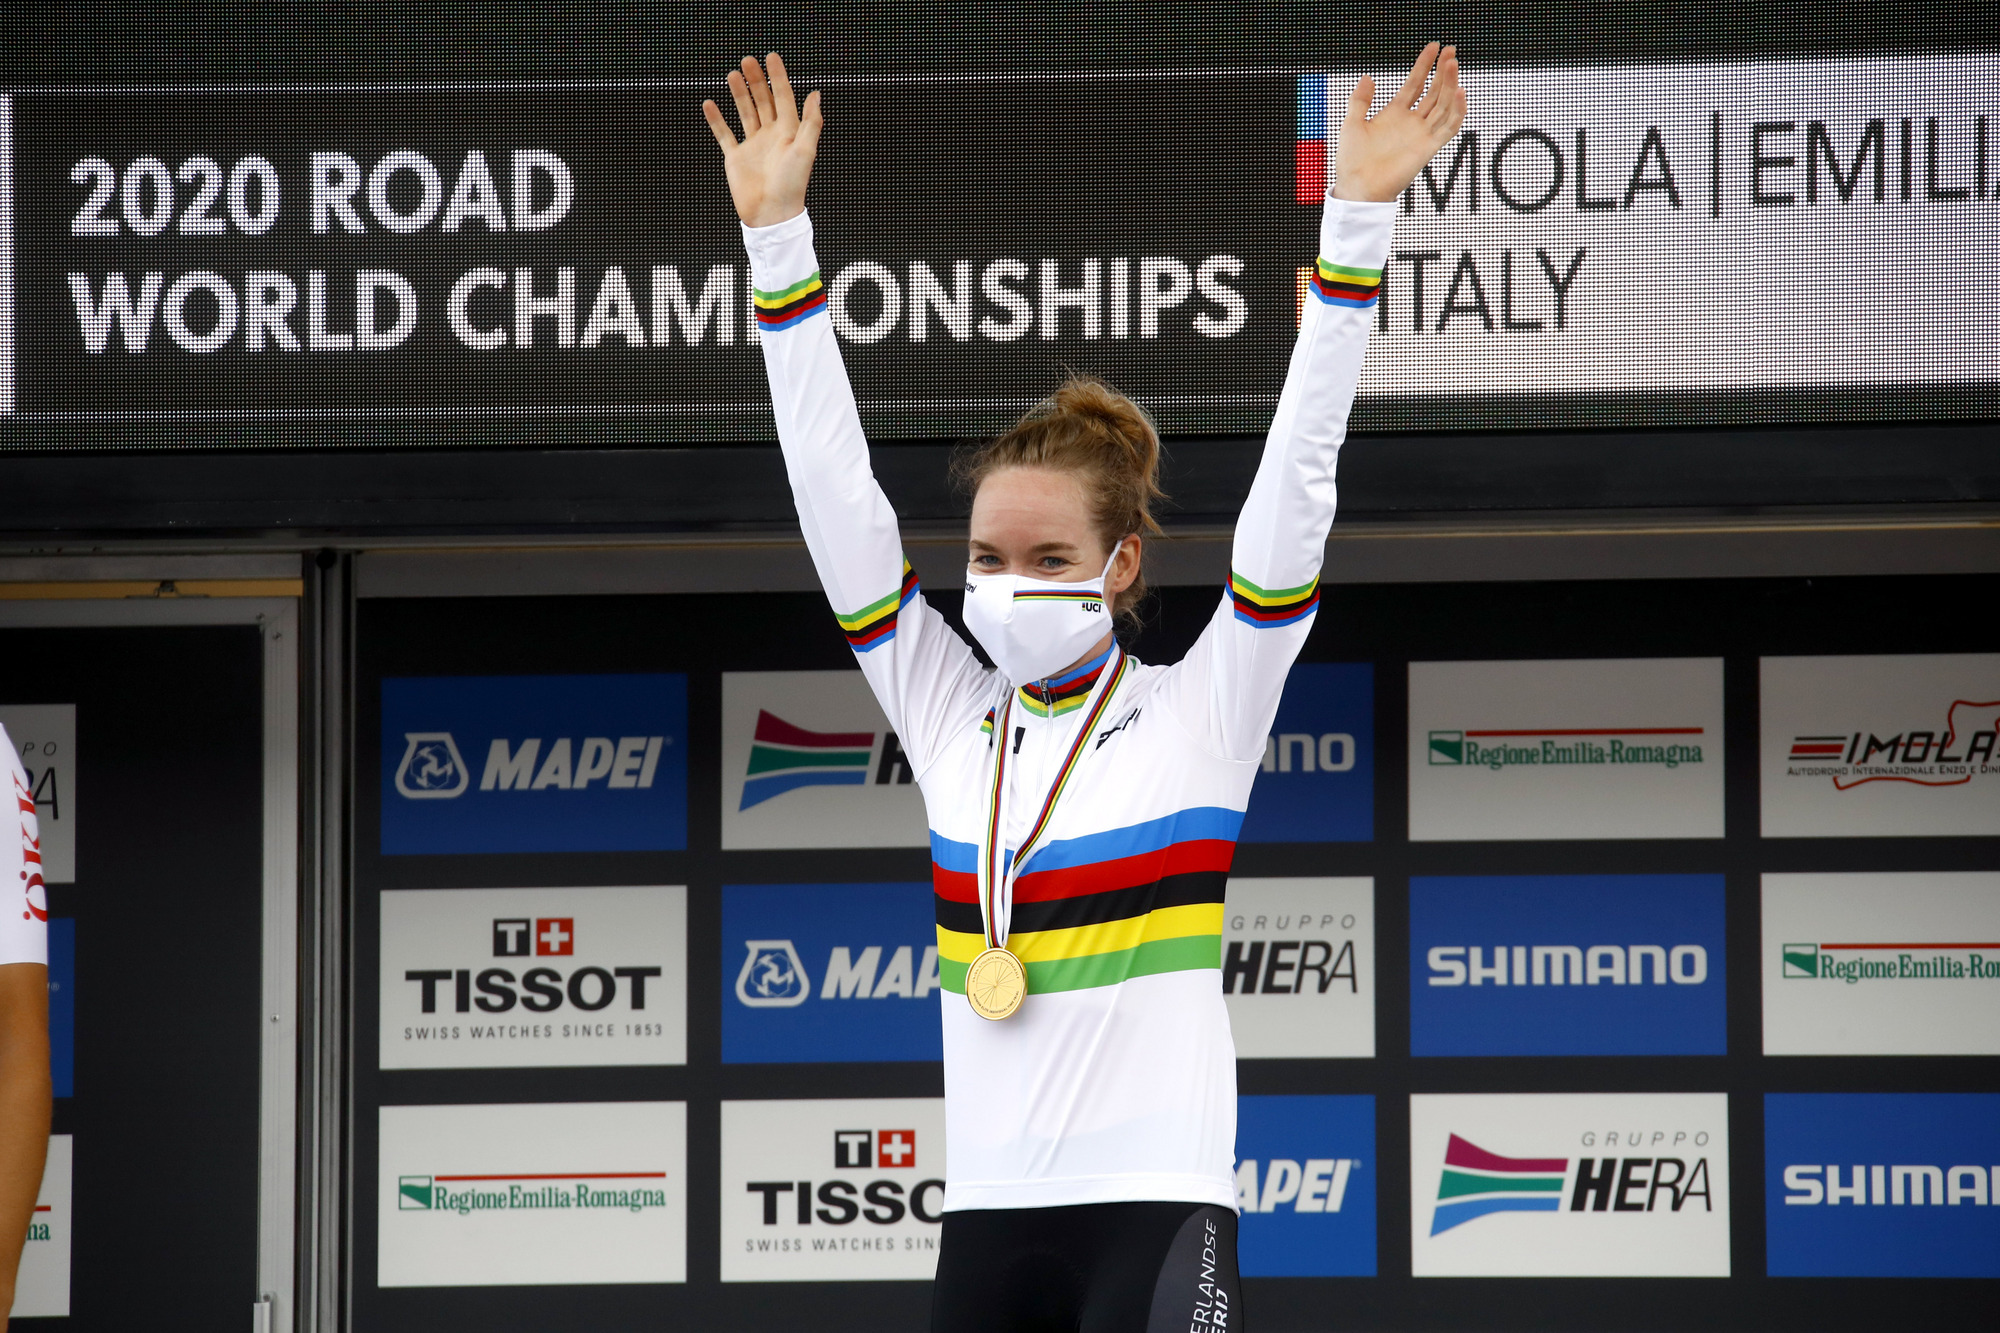 Van Der Breggen Wins Time Trial Title At Imola World Championships Cyclingnews 4403